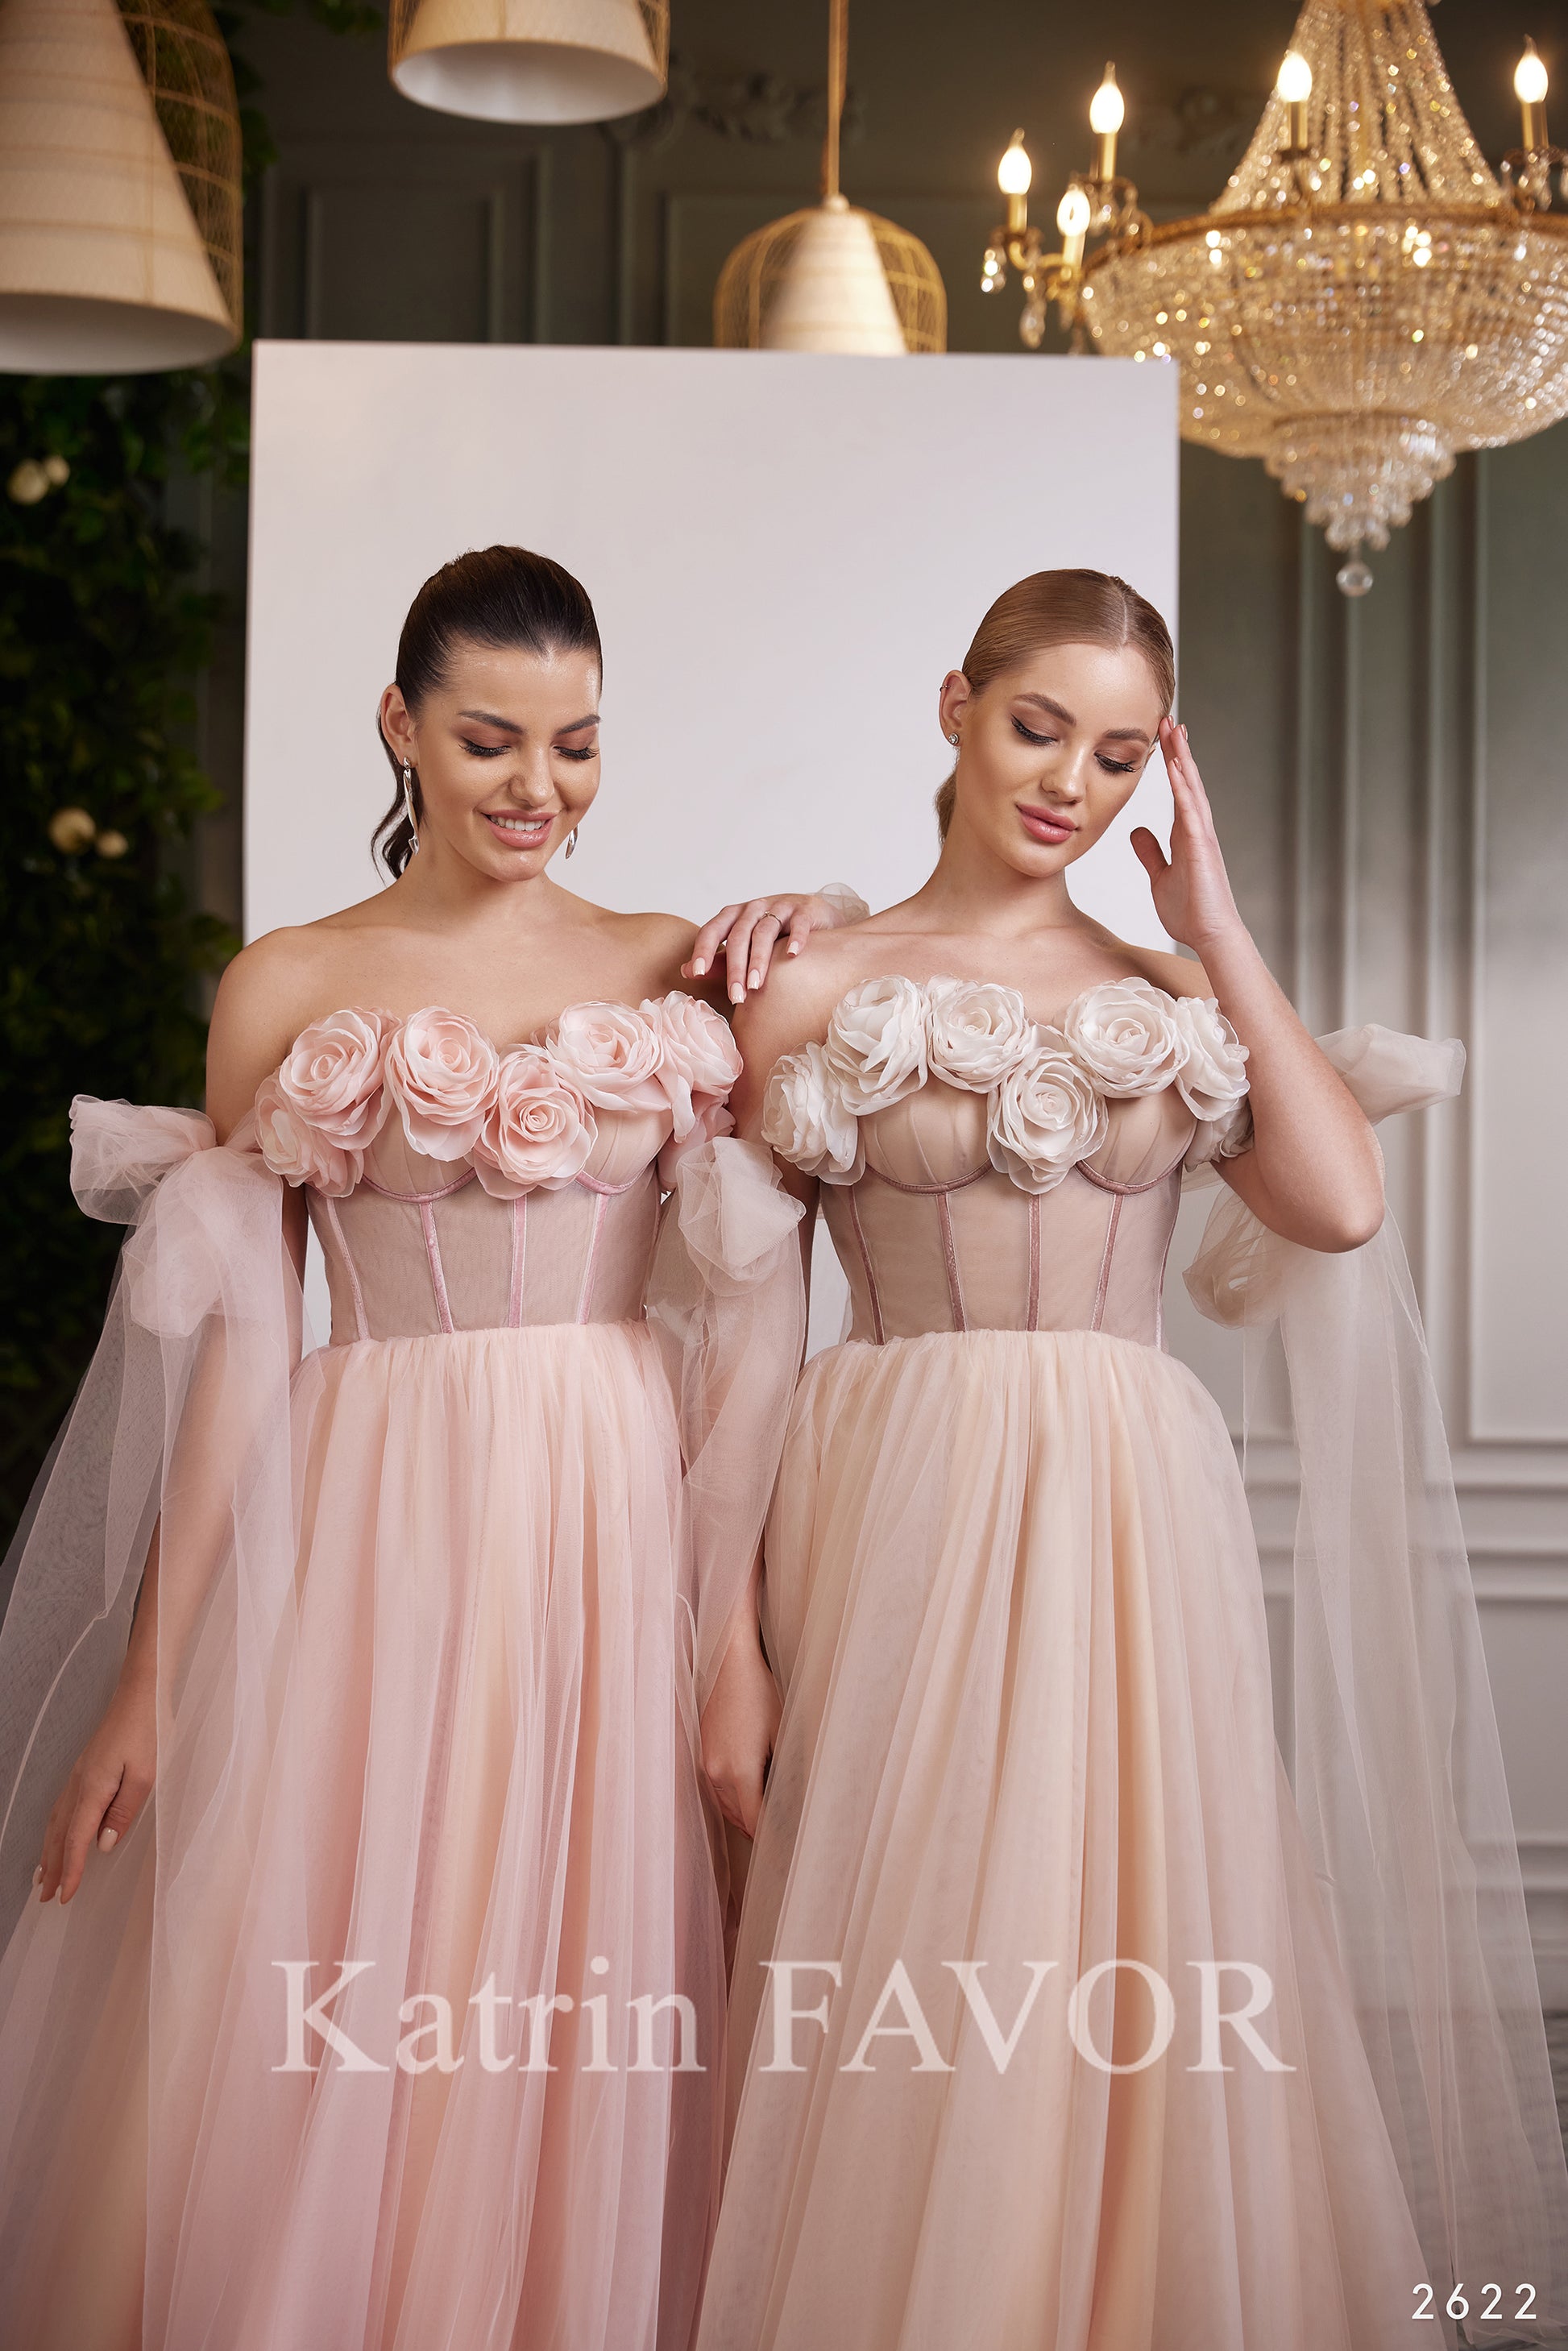 Fairy blush tulle alternative wedding dress